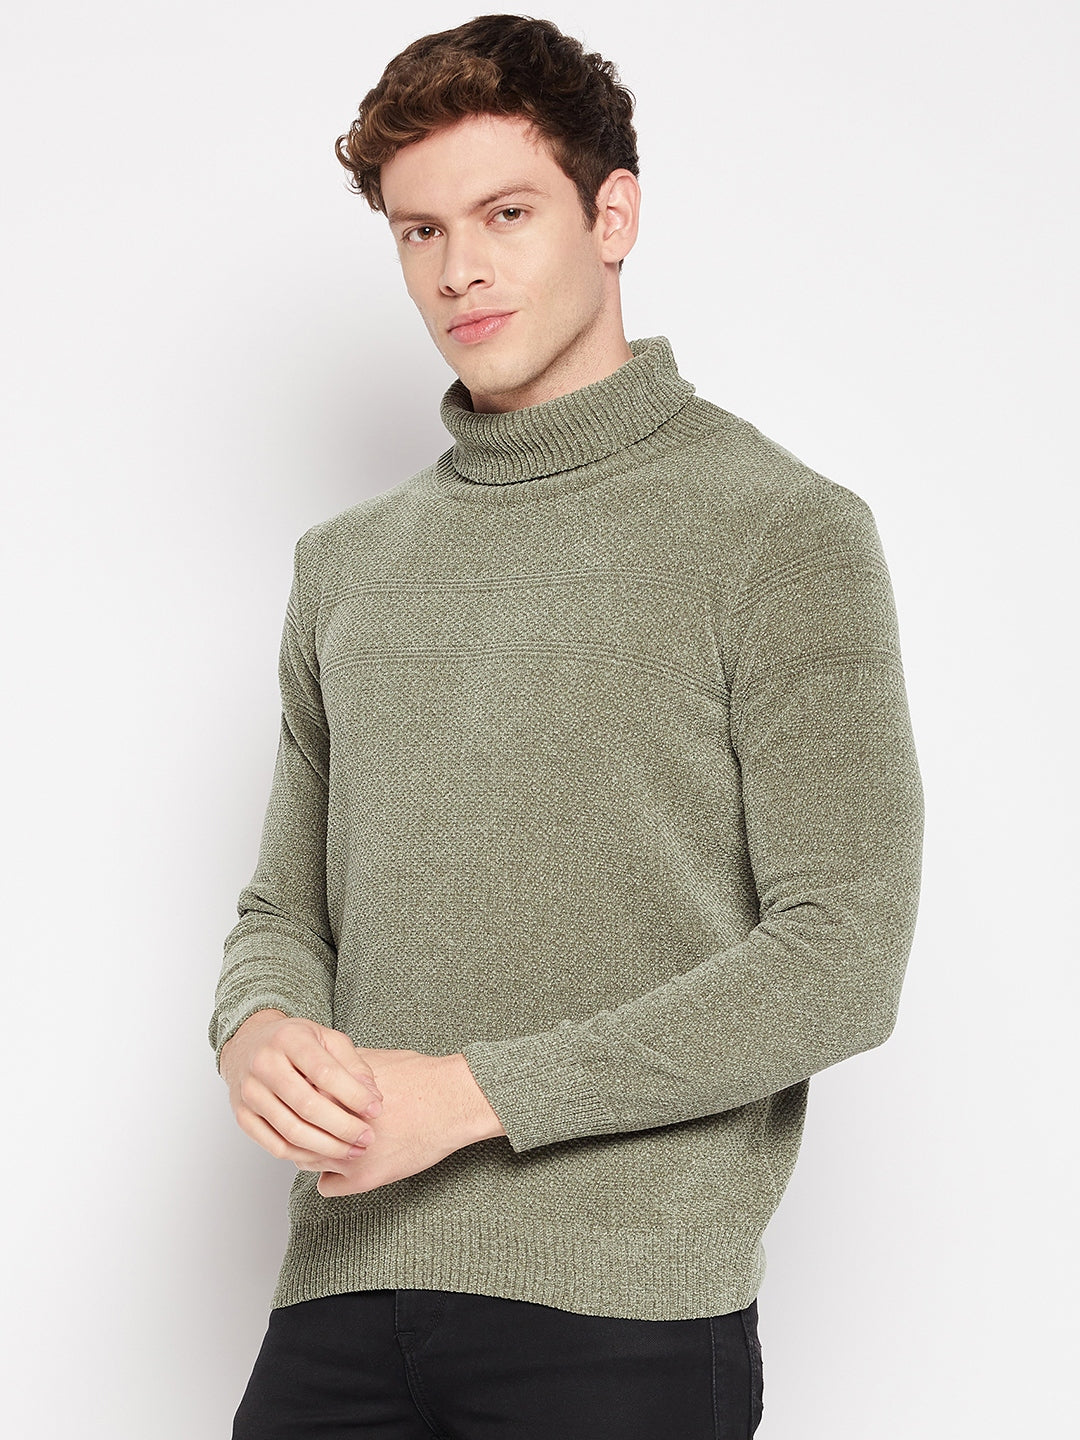 Camla Barcelona Sage Green Sweater For Men